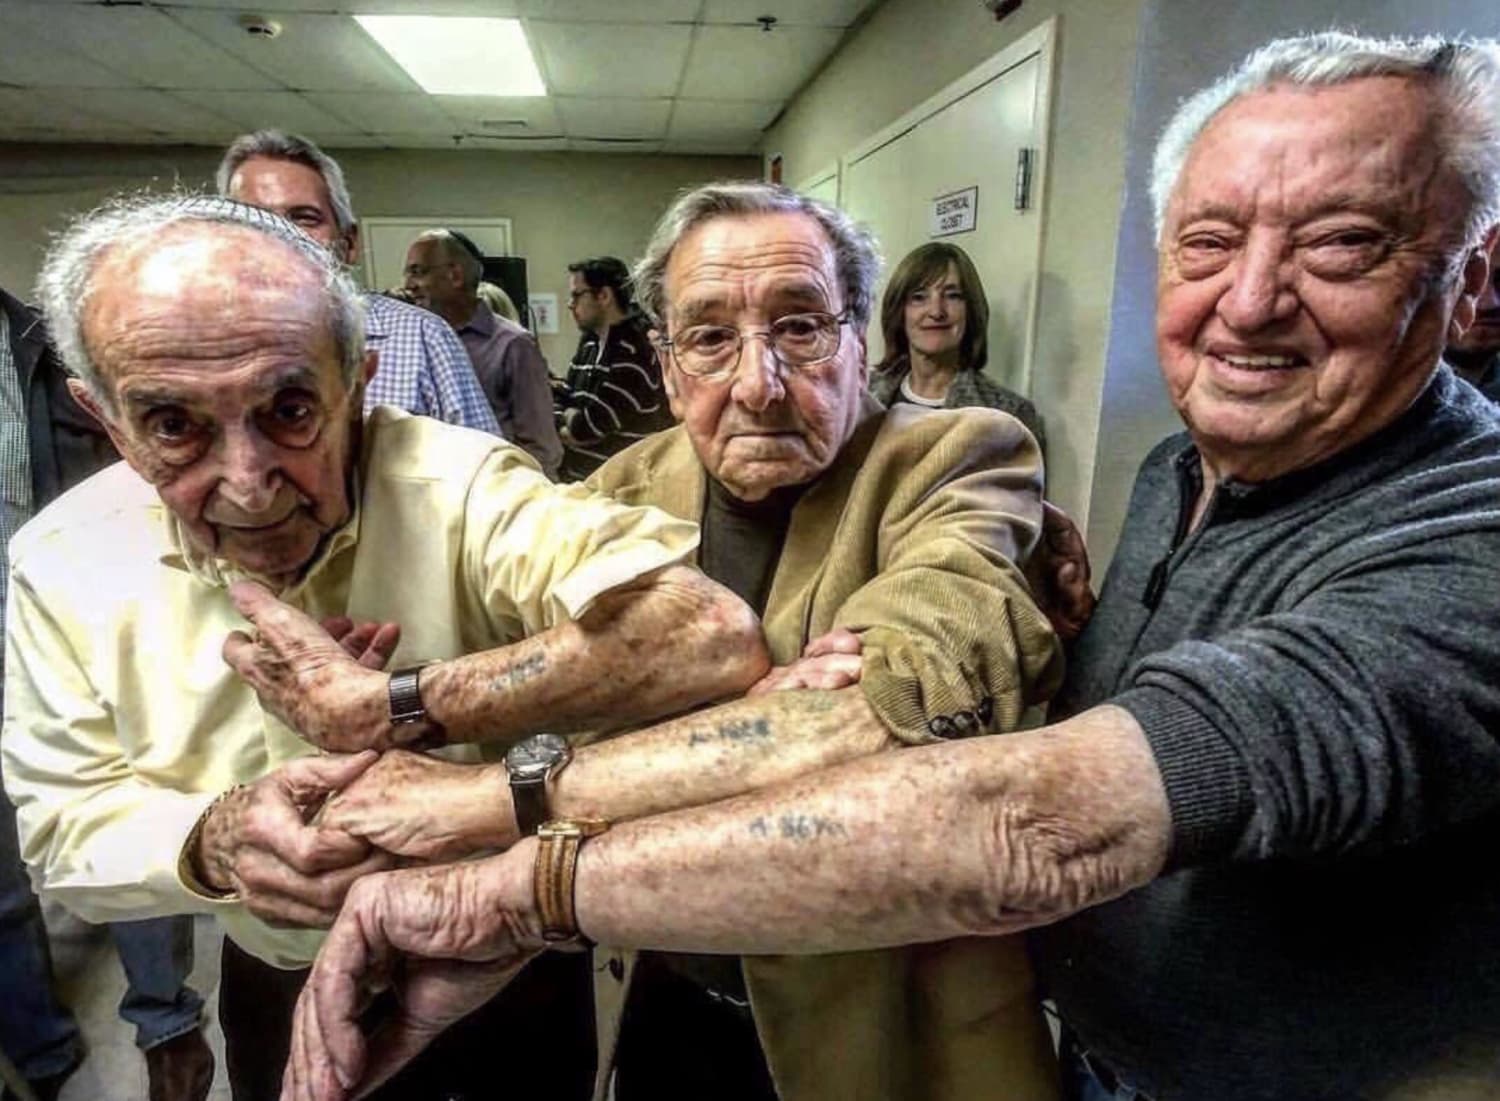 3 Jewish men taken to Auschwitz the same day, tattooed ten numbers apart, reunited 73 years later.